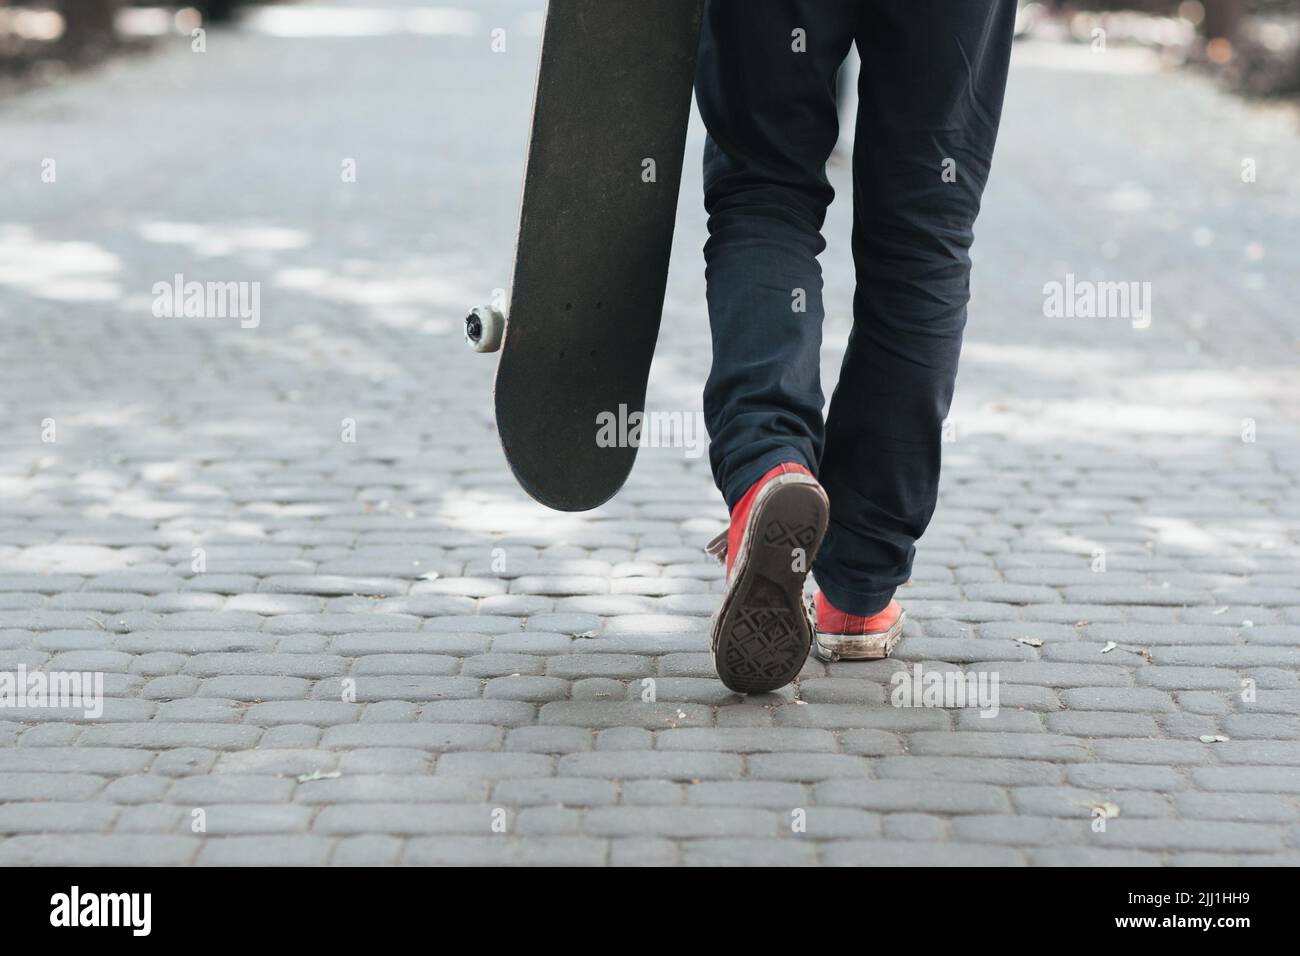 Skateboarder walk at street. City life concept Stock Photo